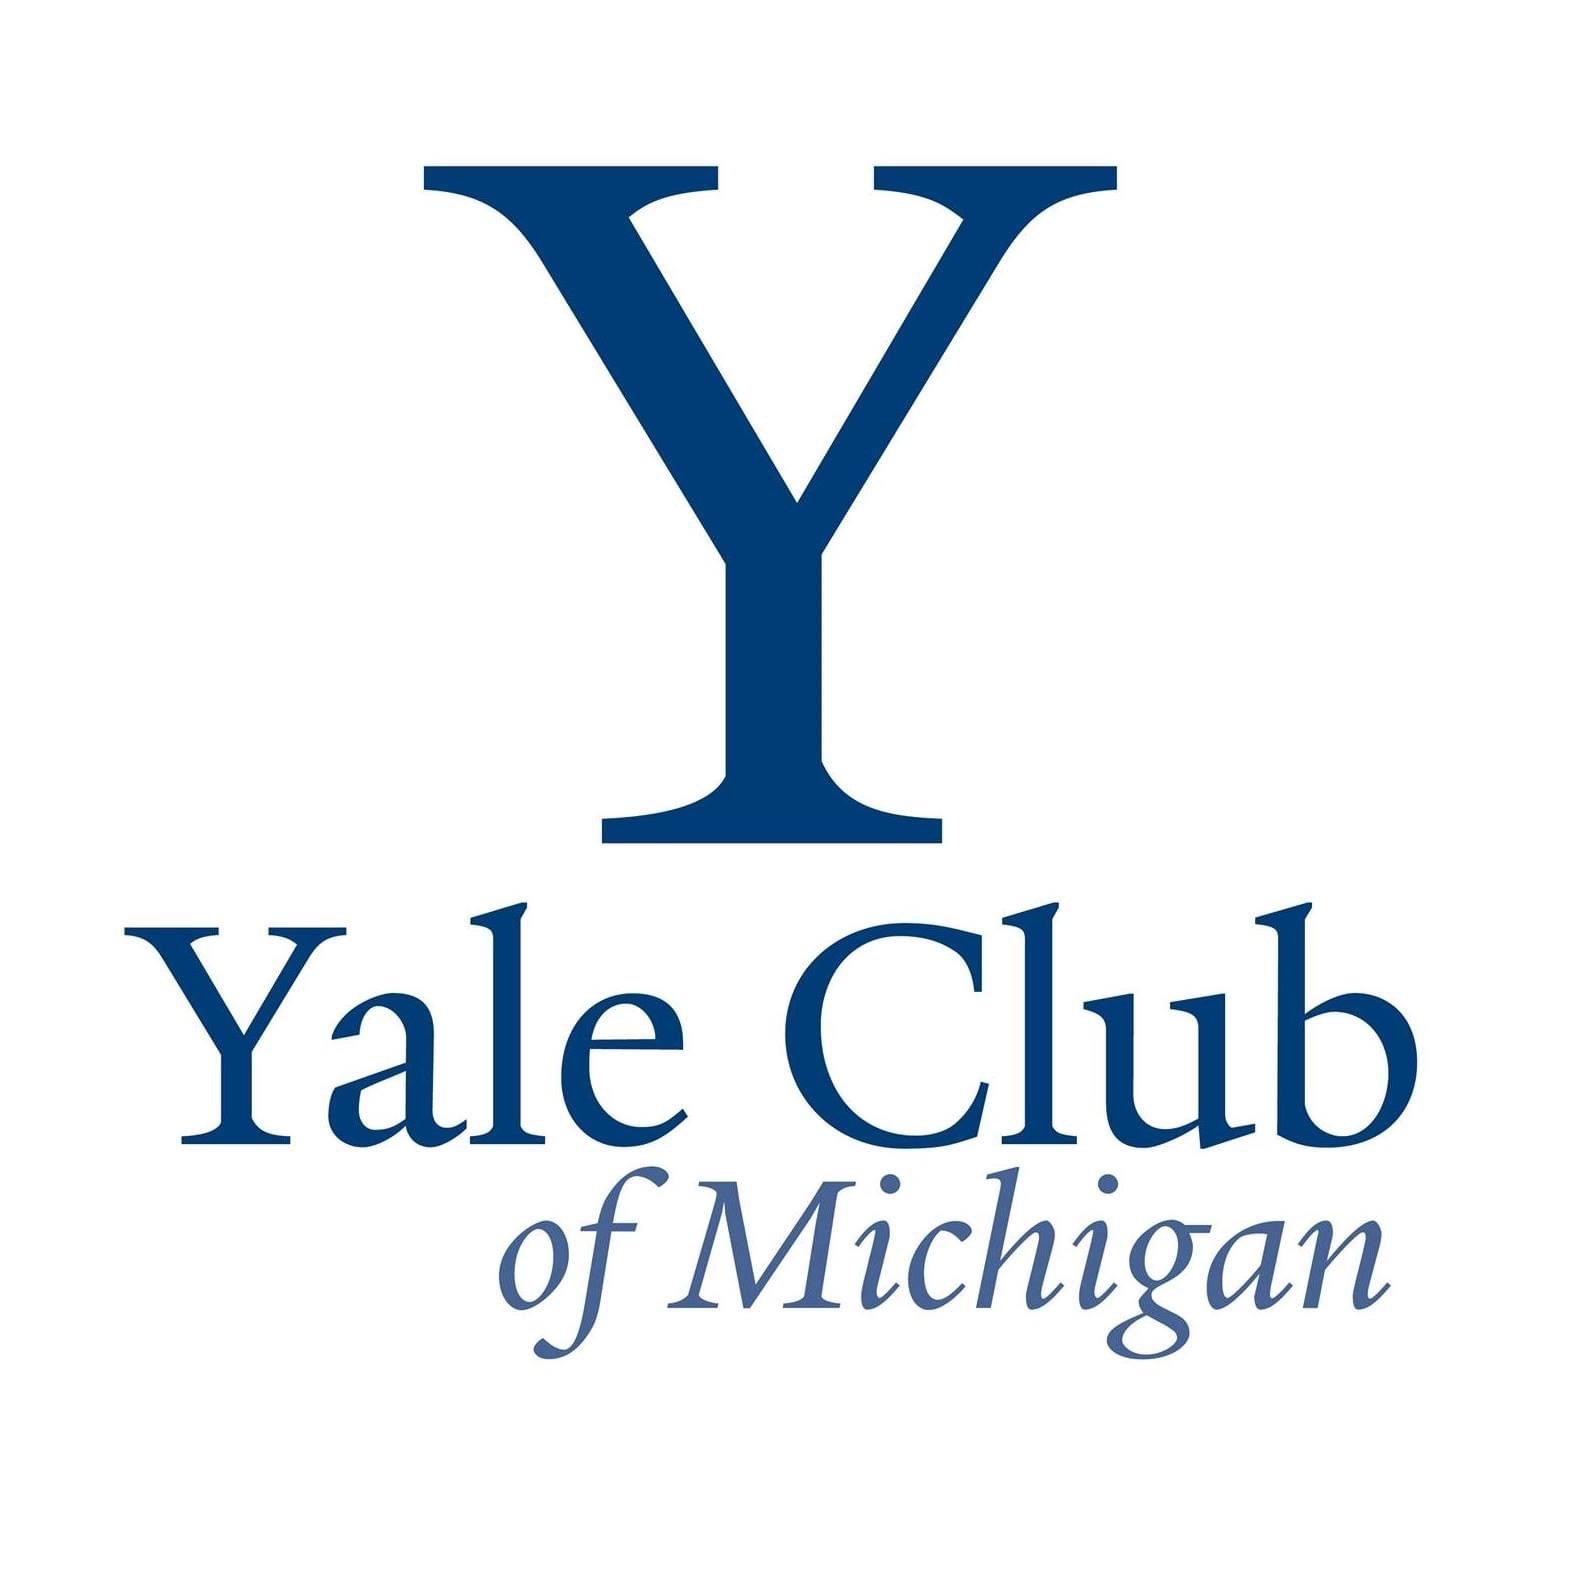 The Yale Club of Michigan 2021